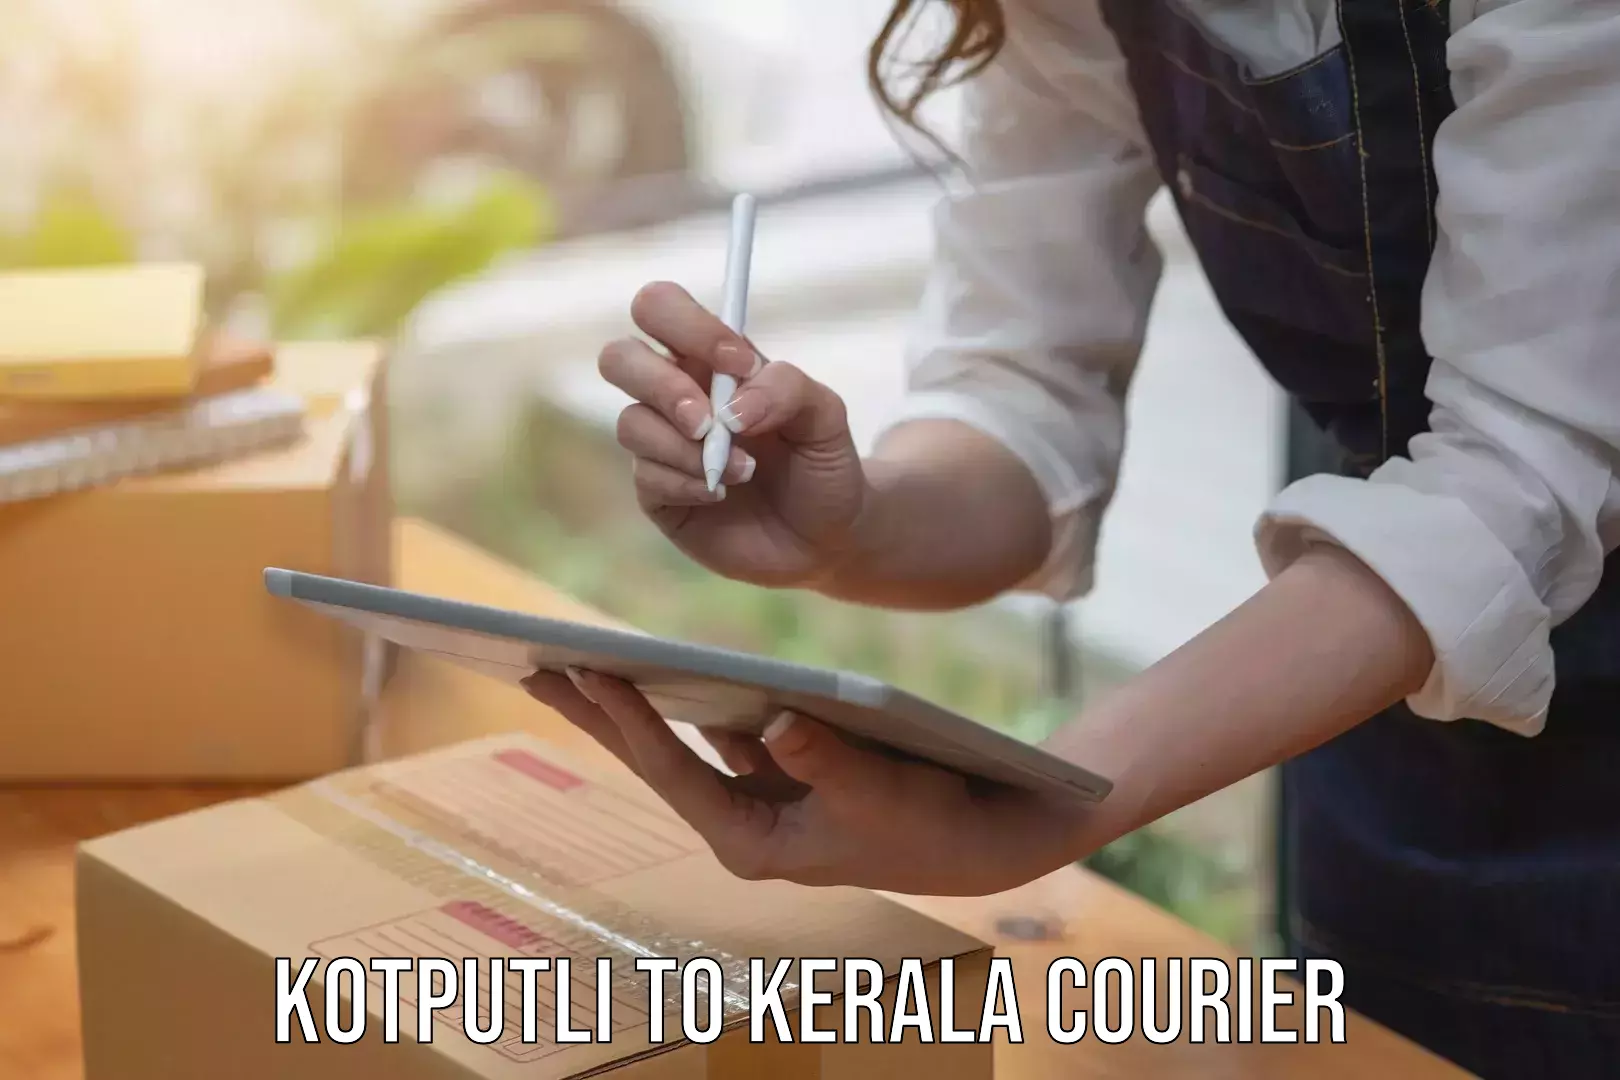 Courier service partnerships Kotputli to Parappa